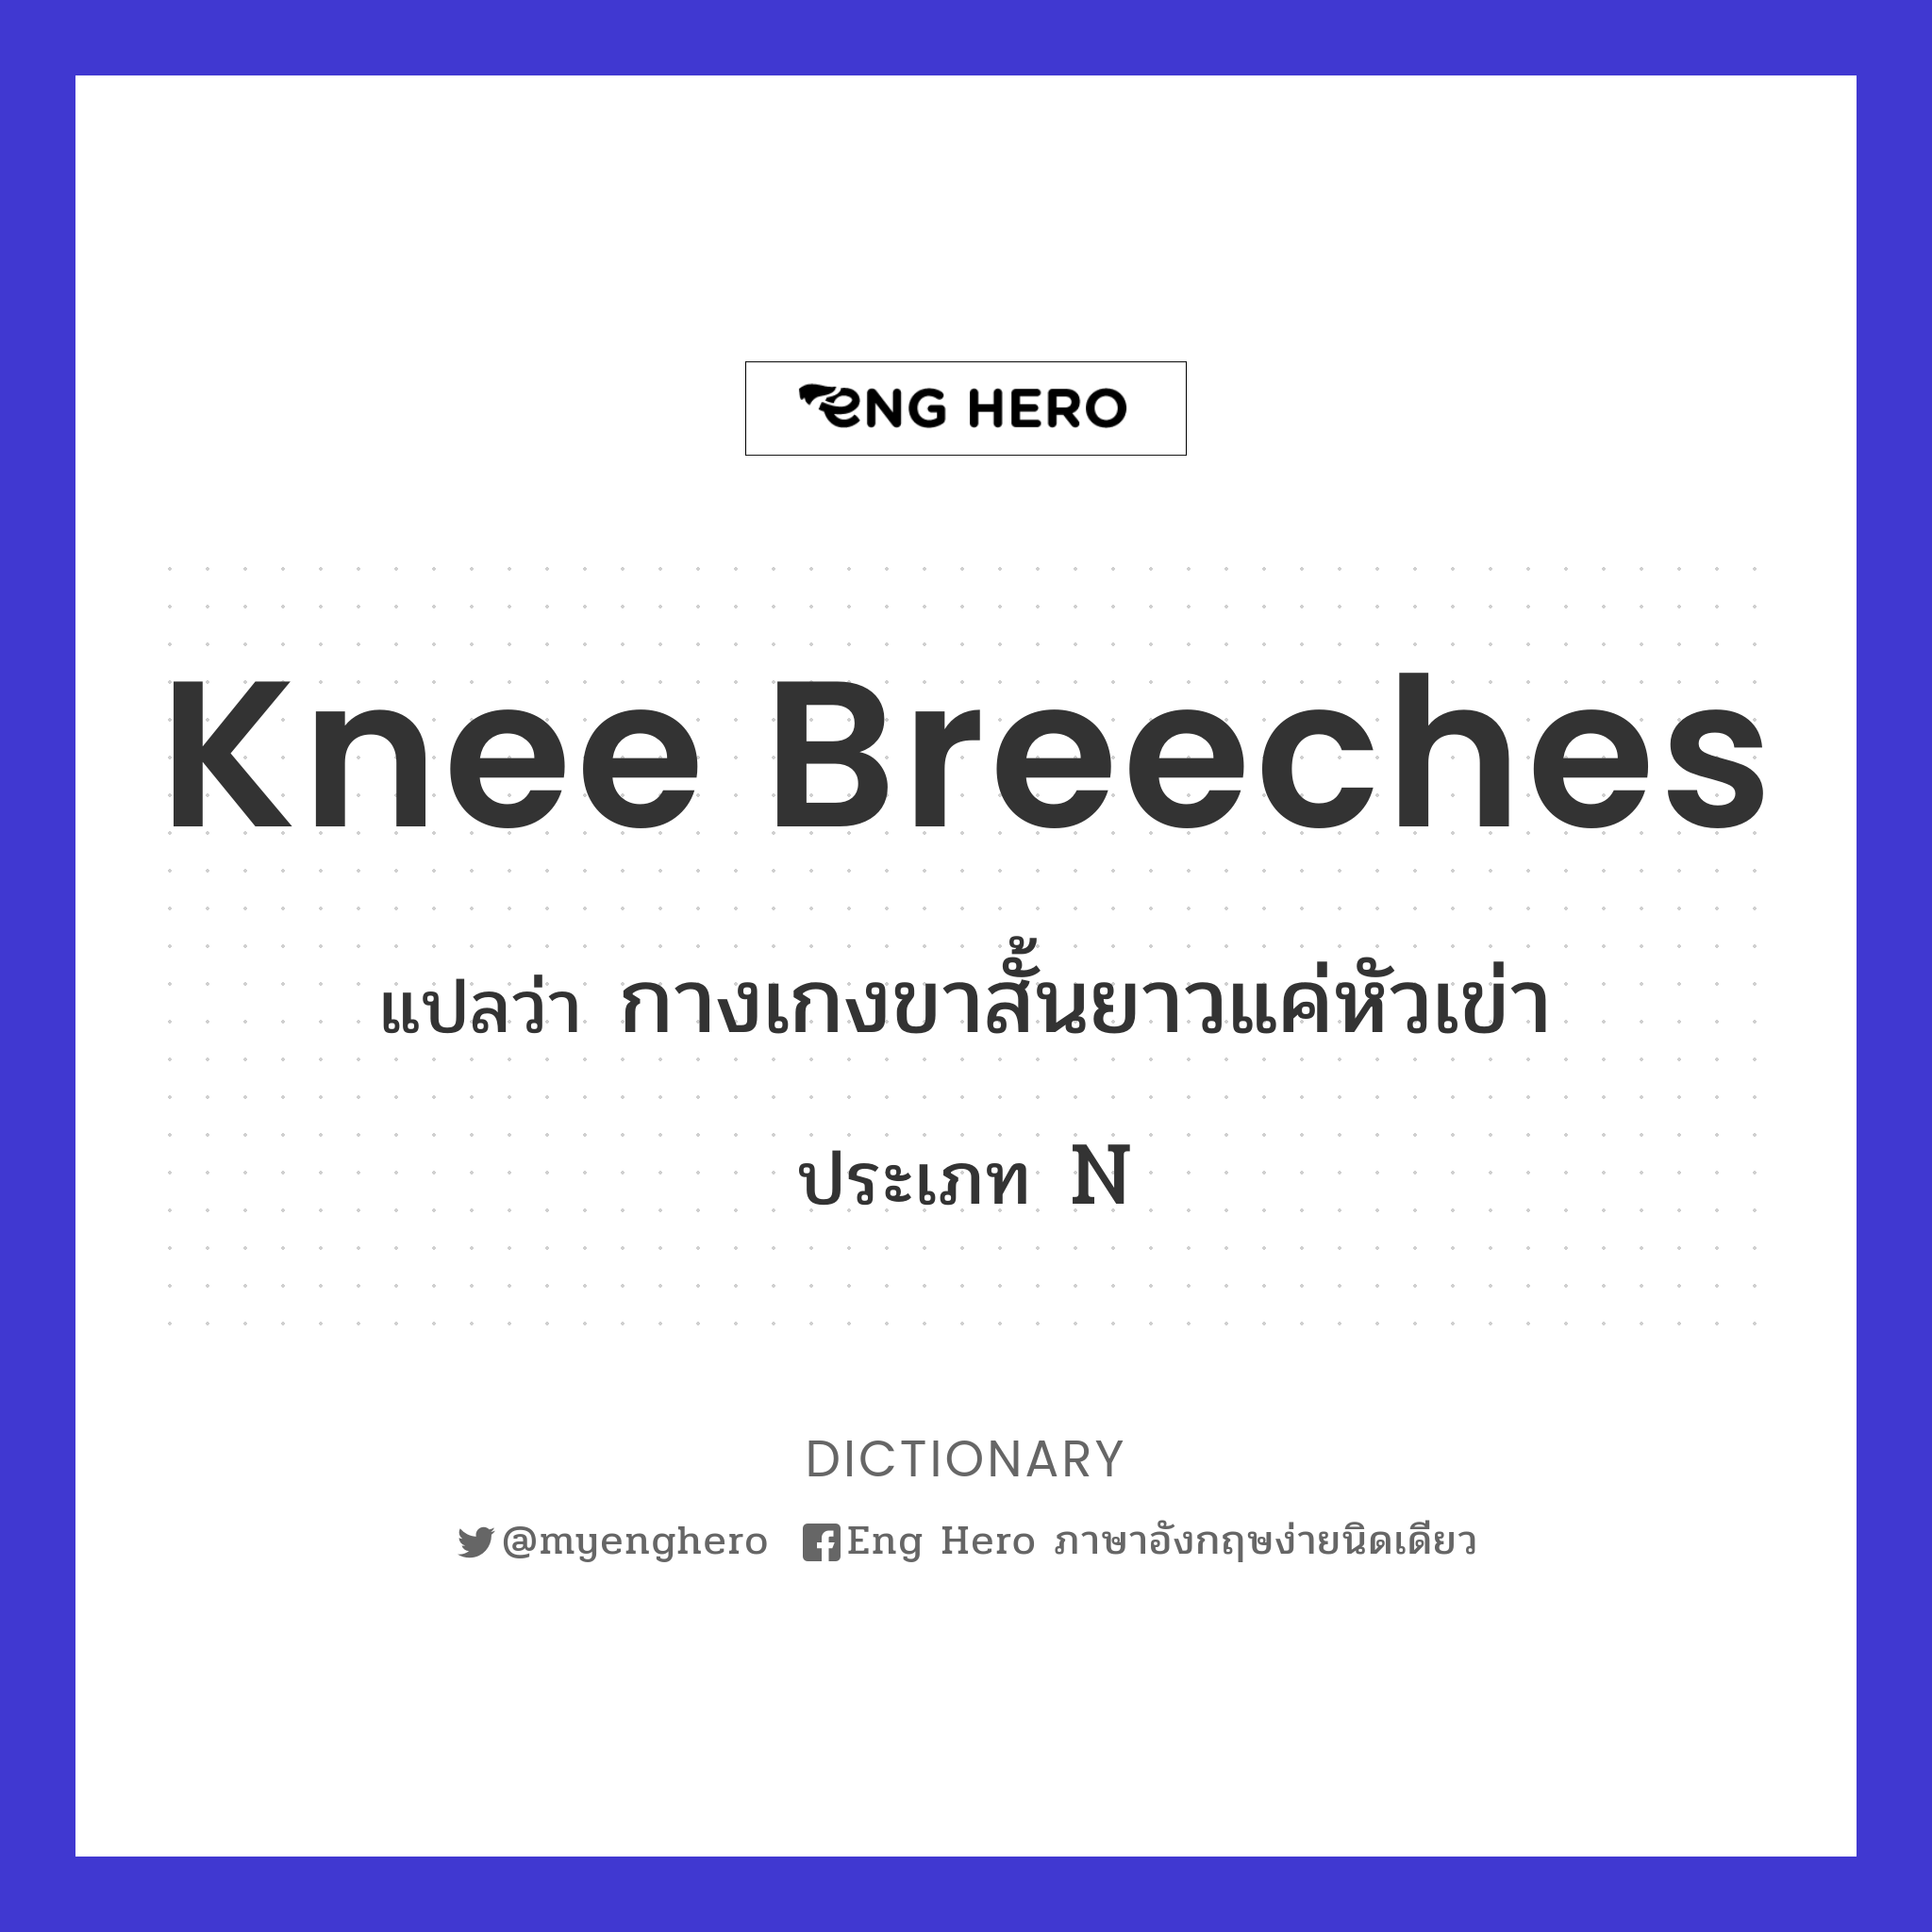 knee breeches